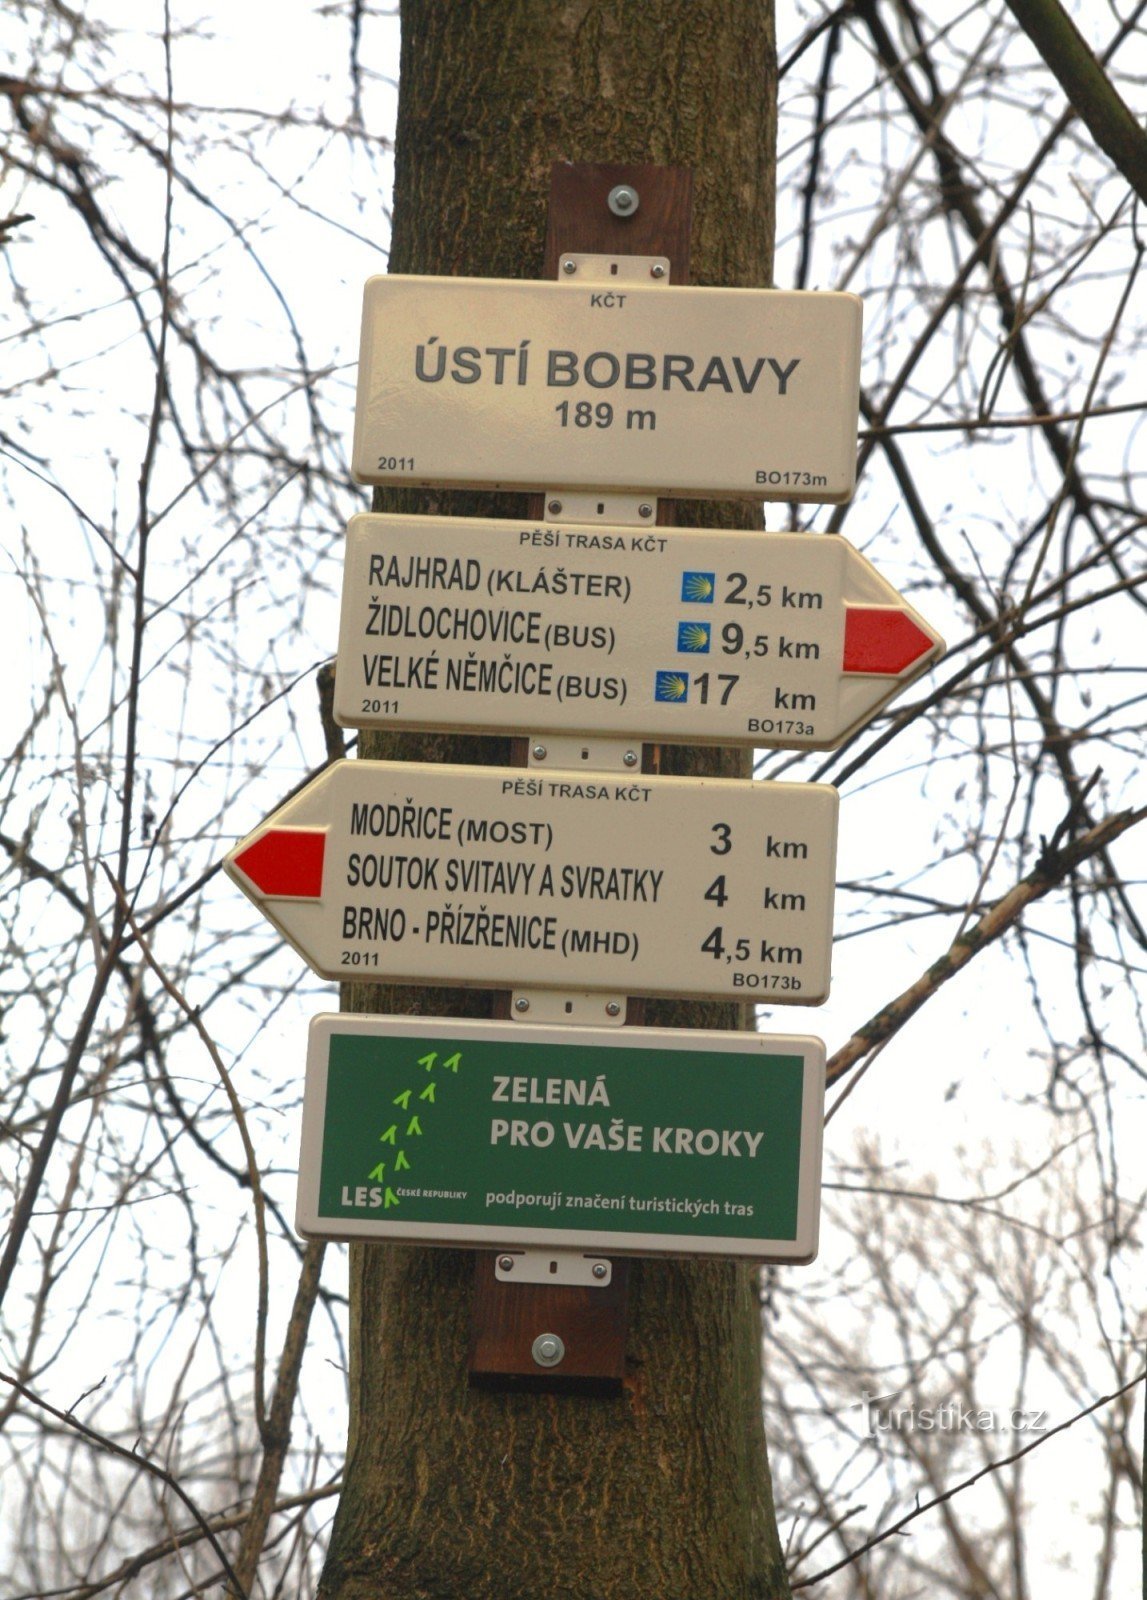 Turistvejkryds i Ústí Bobrava